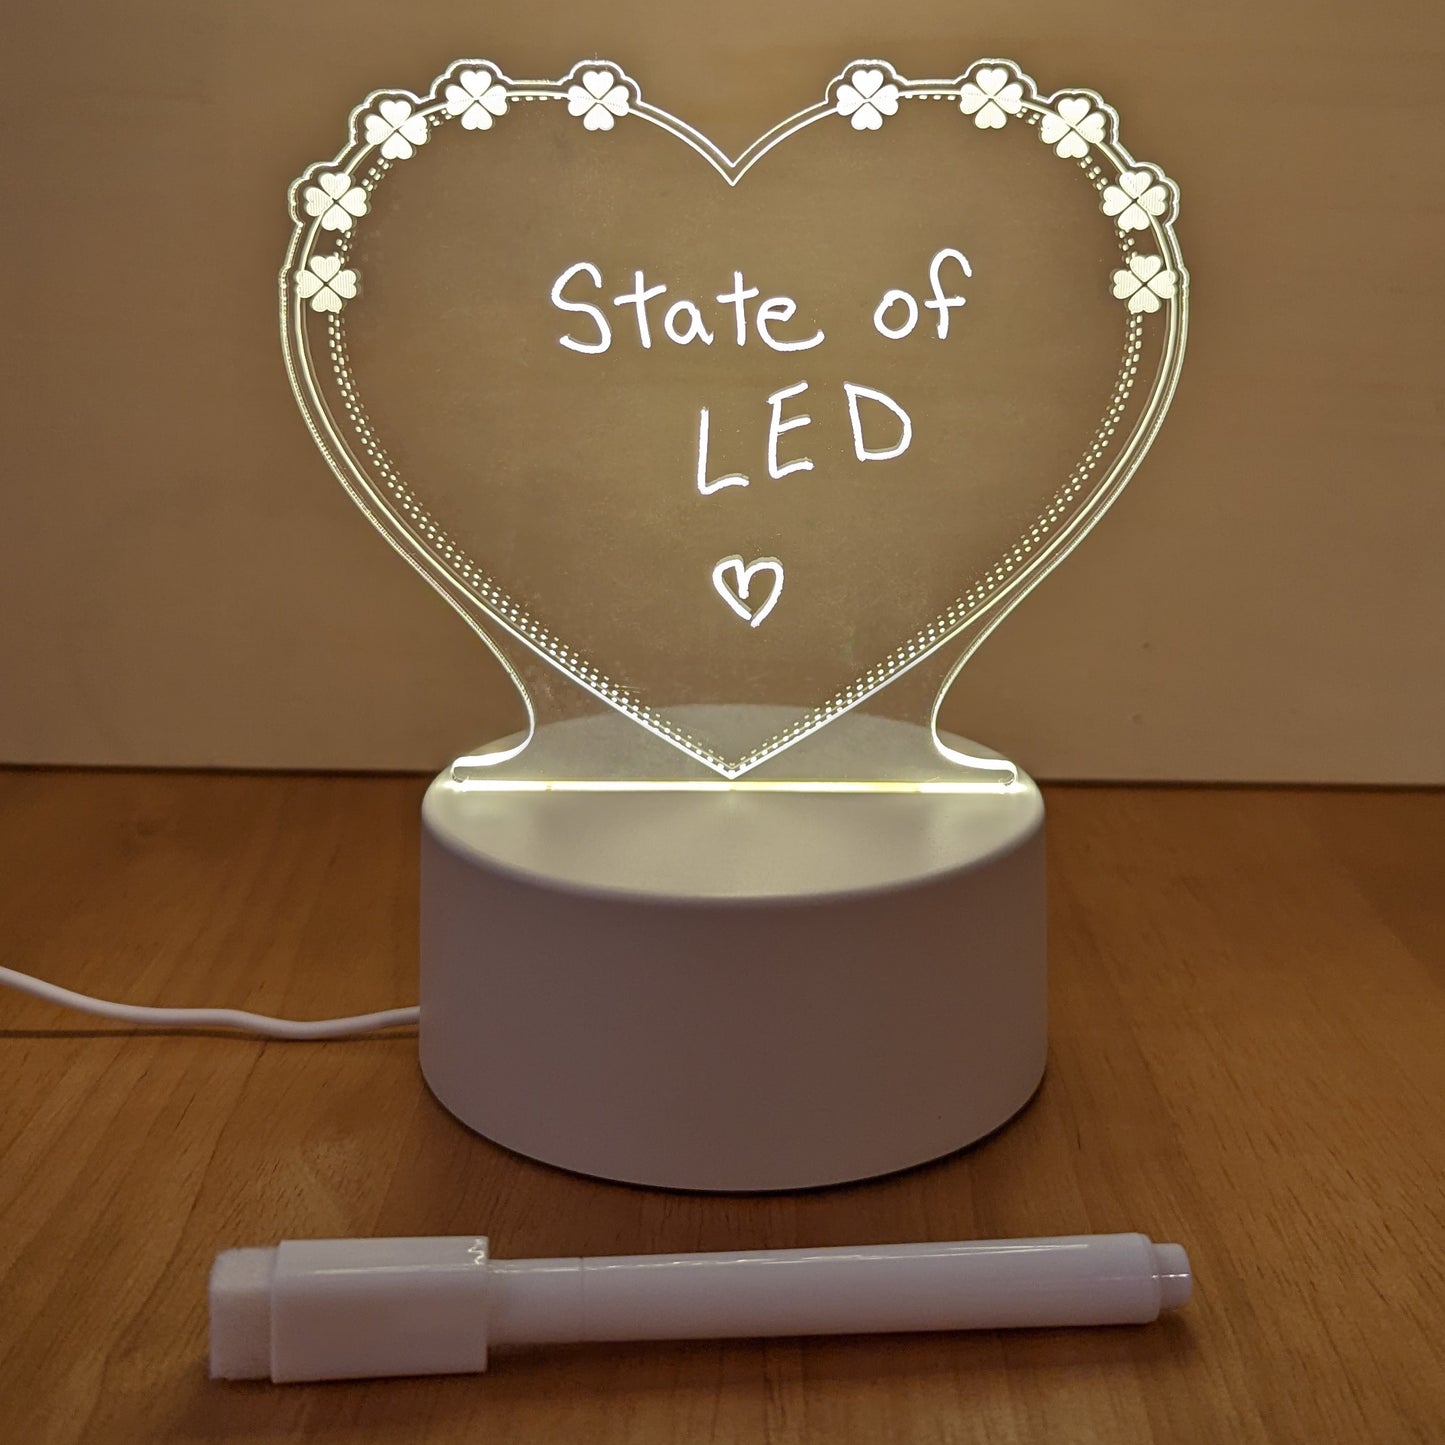 The Heart-Shaped LED Acrylic Message Writing Board